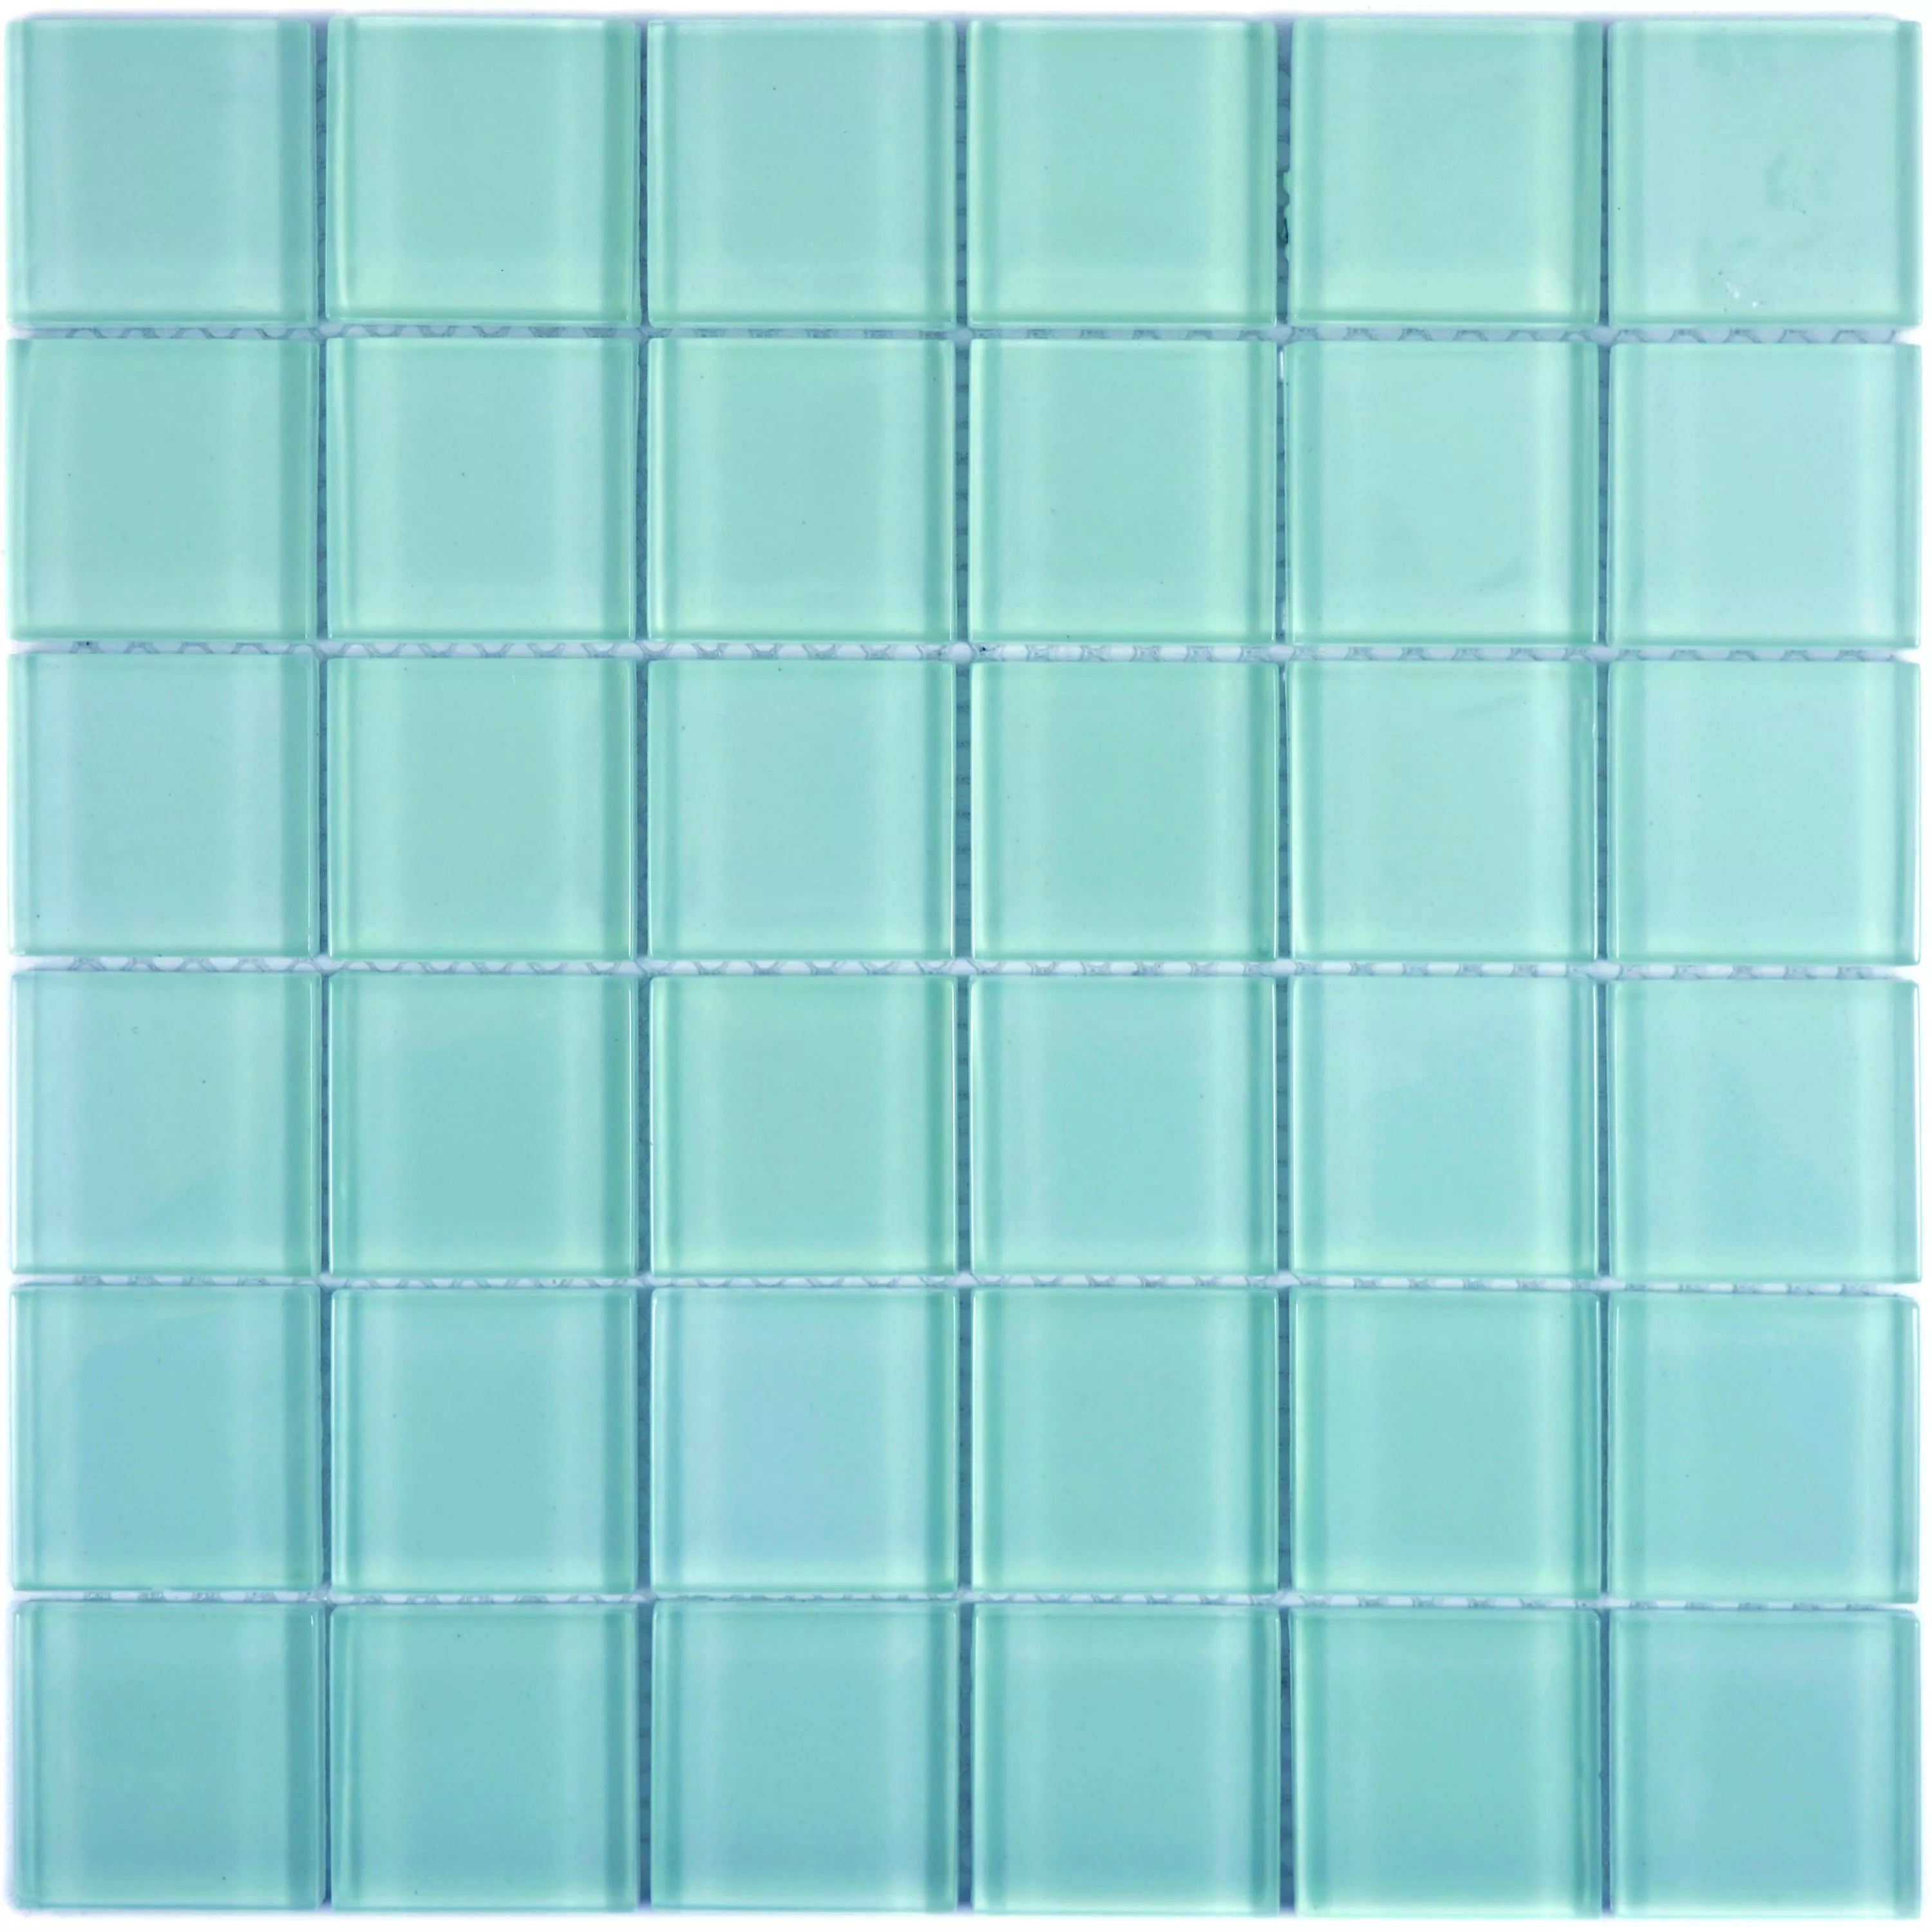 Mosaico De Vidro Azulejos Destiny Neon Auto-Luminoso Quadrada 48